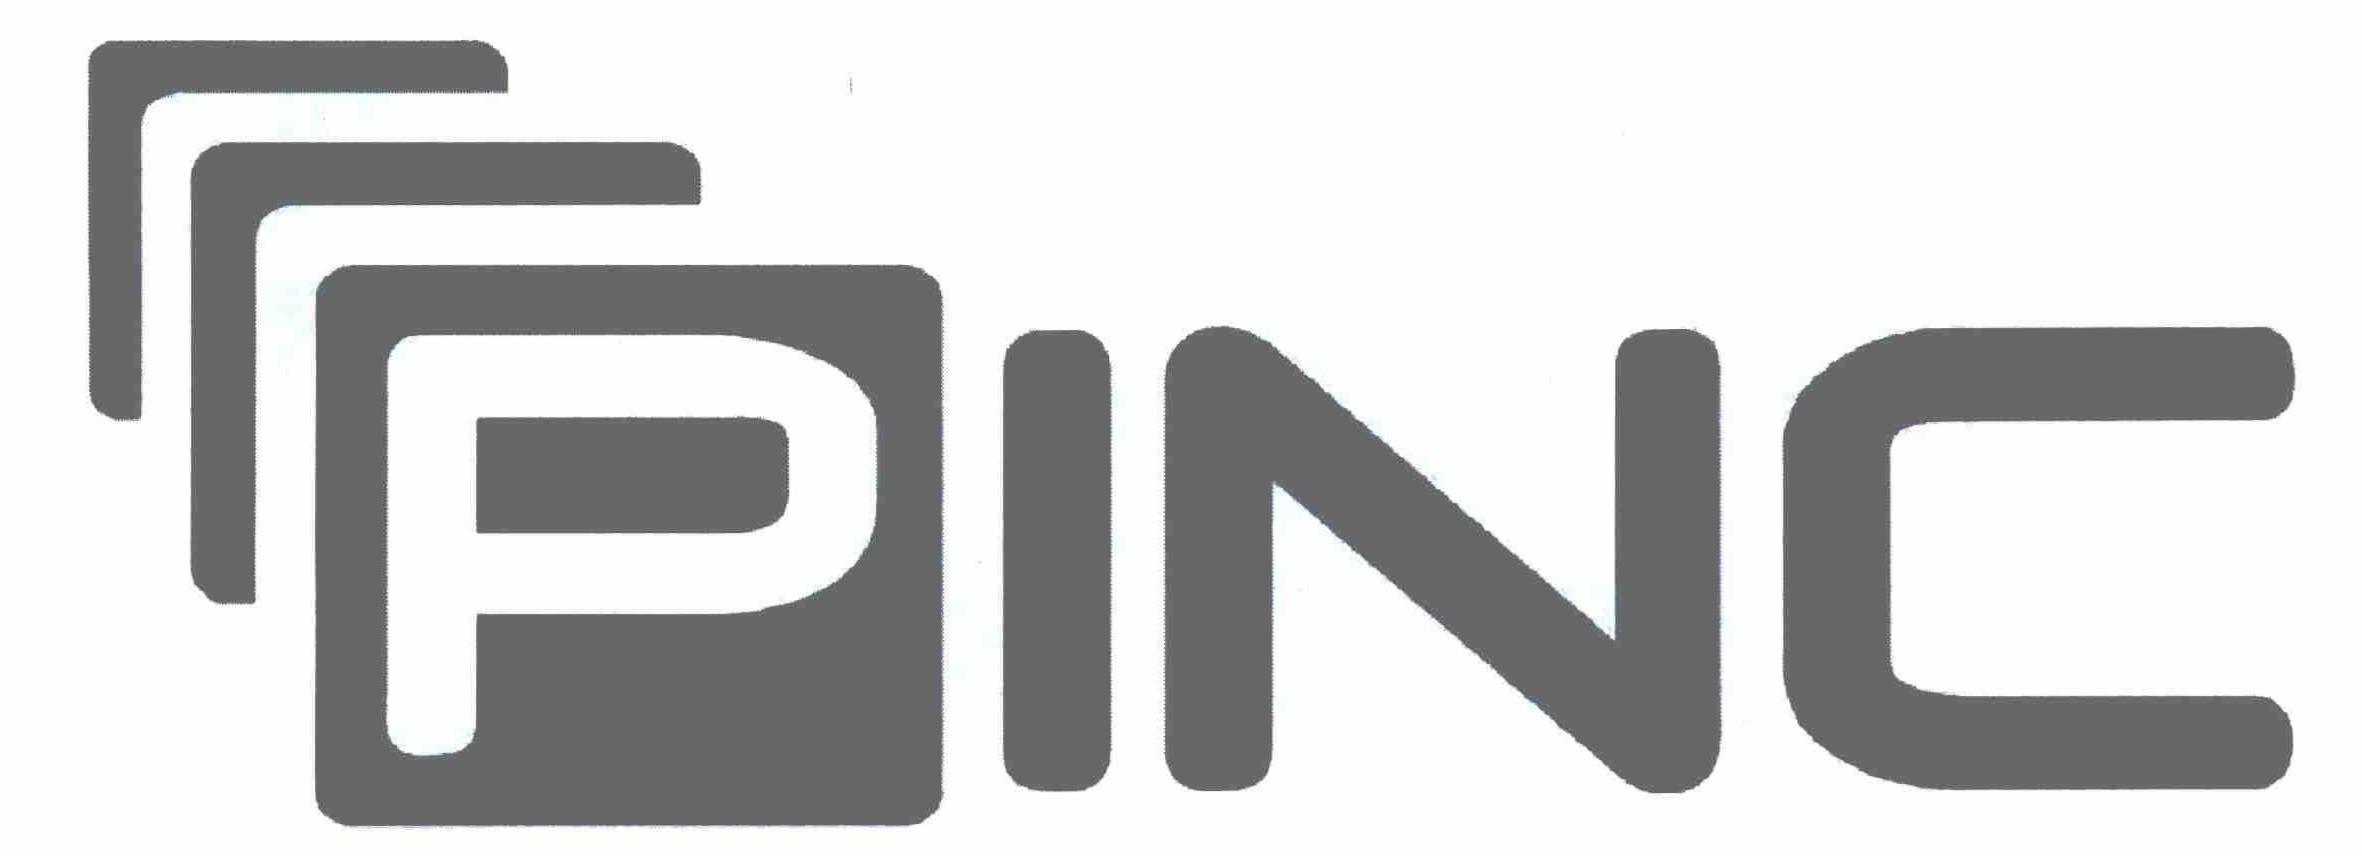 Trademark Logo PINC